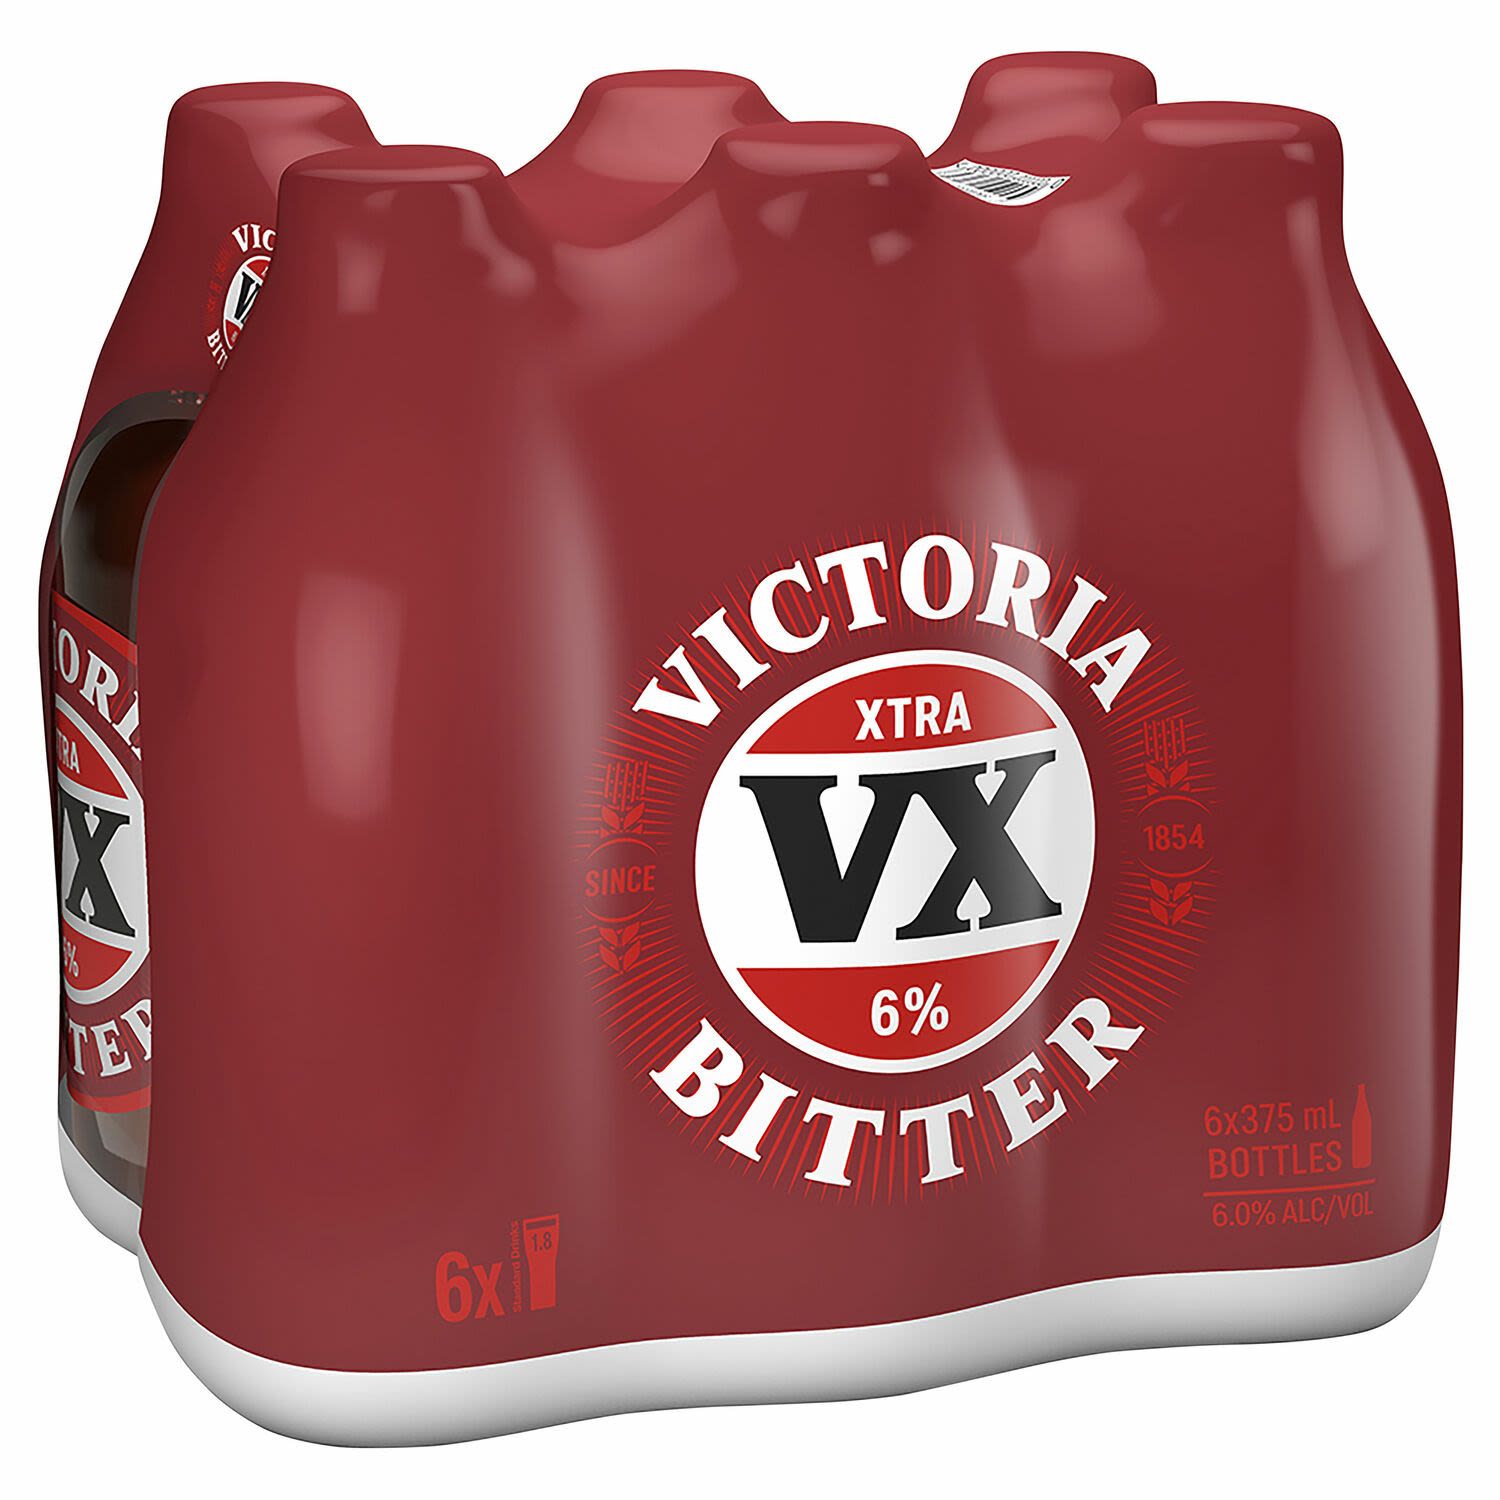 Victoria Bitter XTRA Bottle 375mL 6 Pack